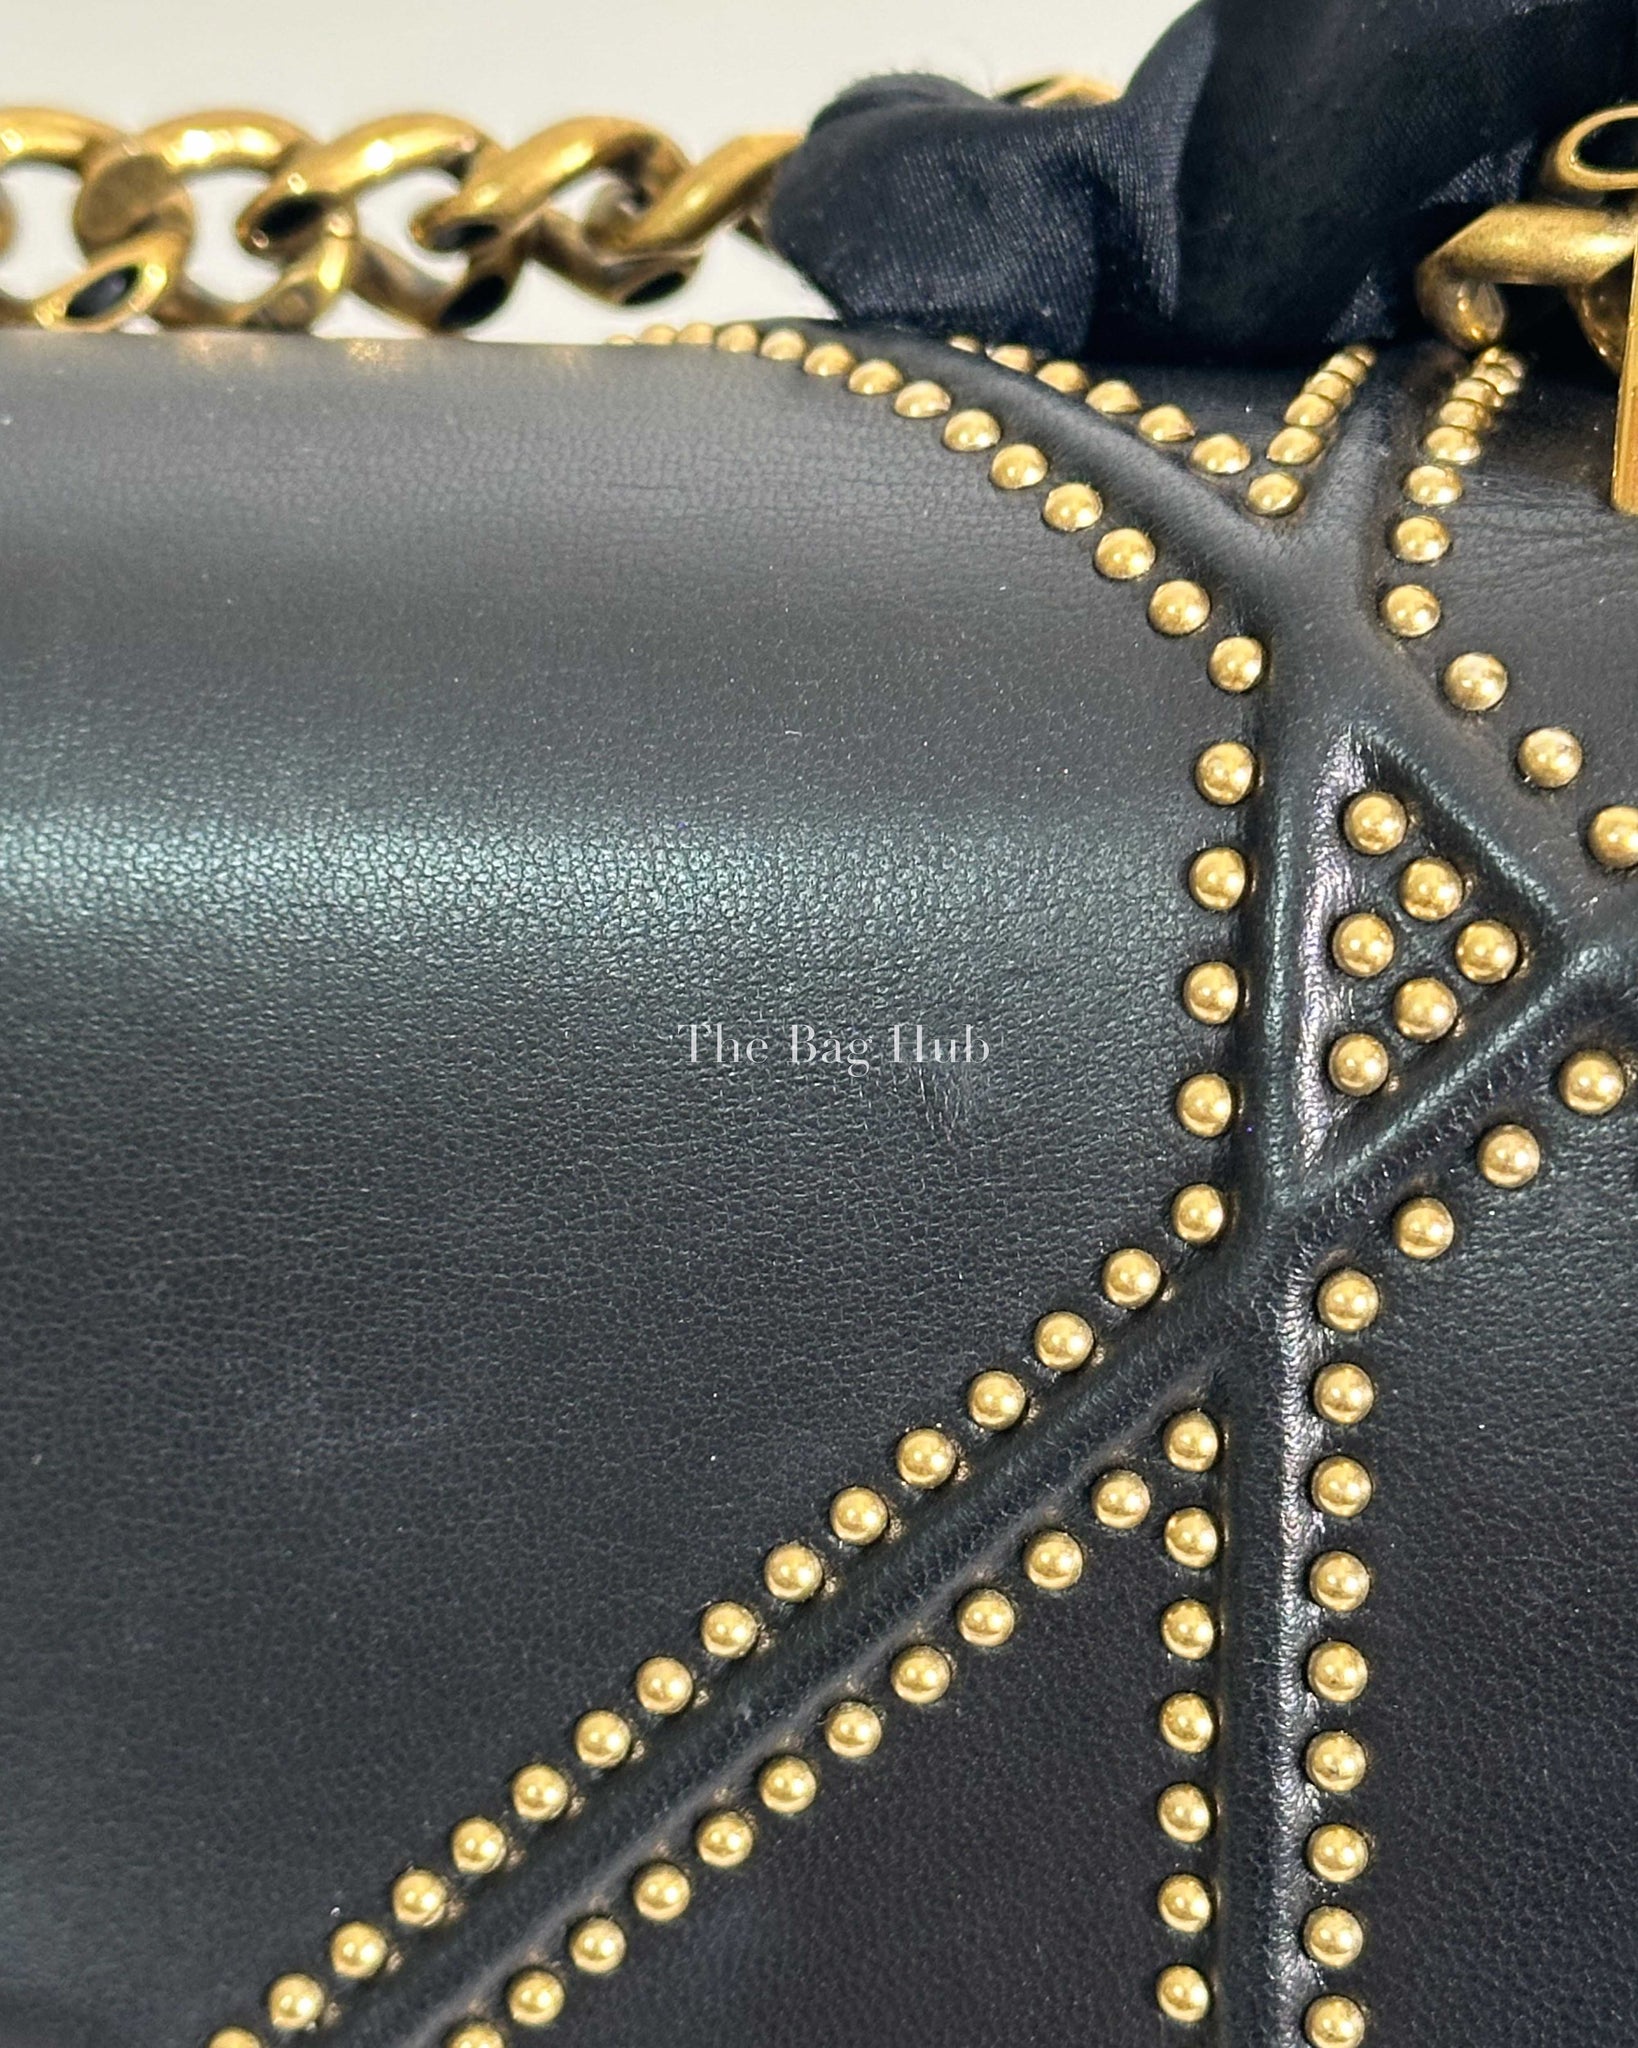 Dior Black Lambskin Small Studded Diorama Flap Shoulder Bag